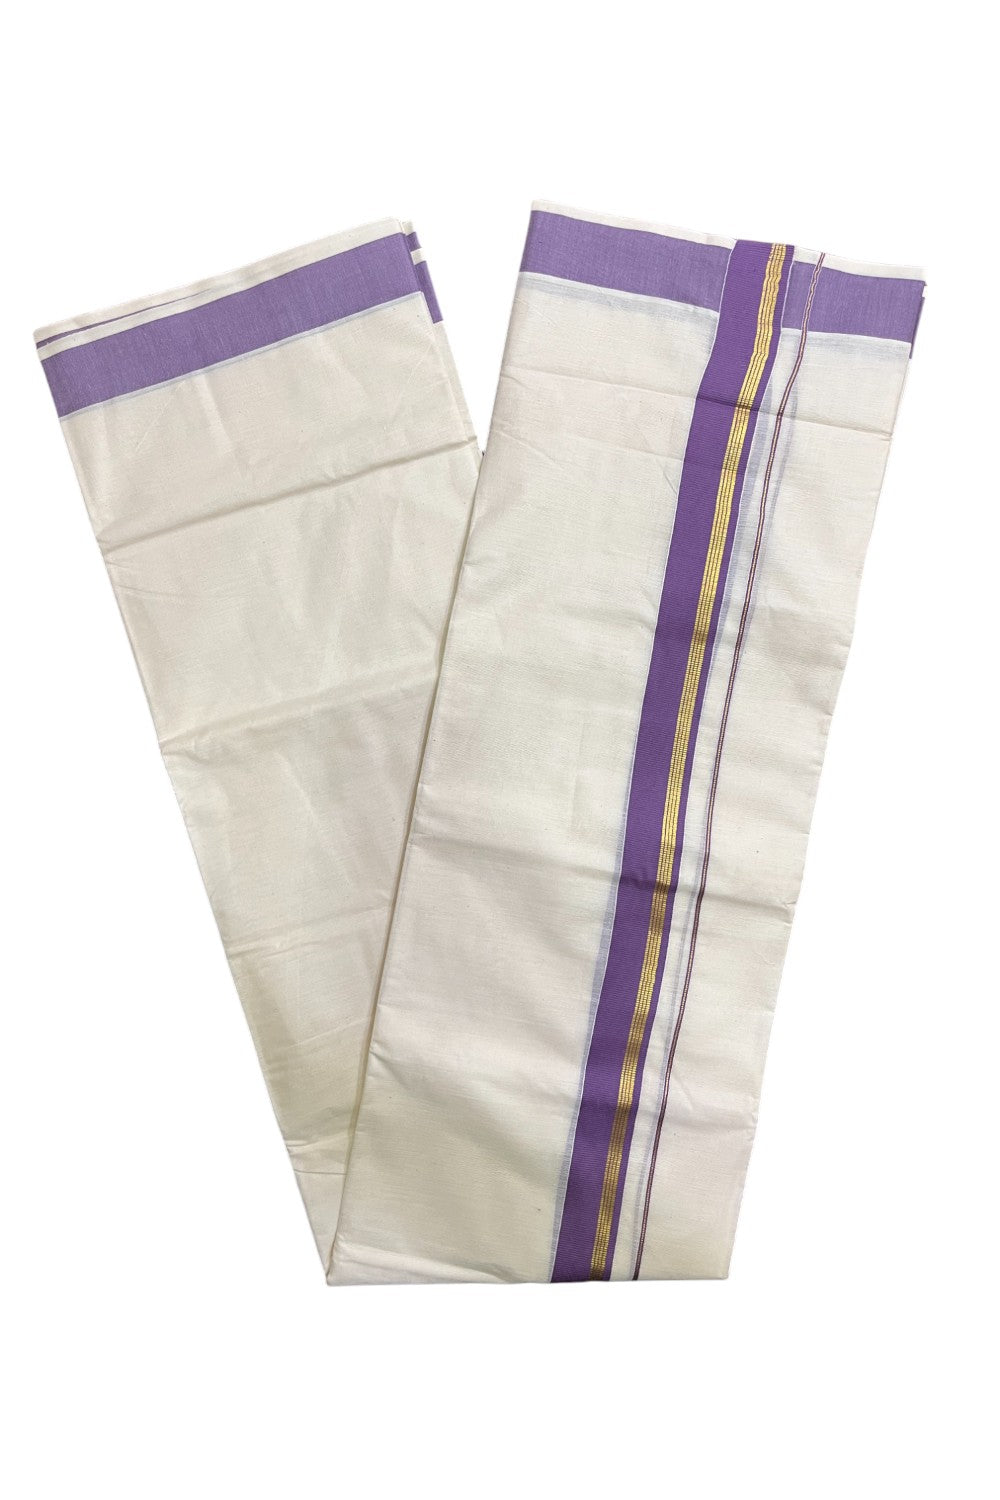 Kerala Pure Cotton Double Mundu with Violet and Kasavu Border (South Indian Kerala Dhoti)